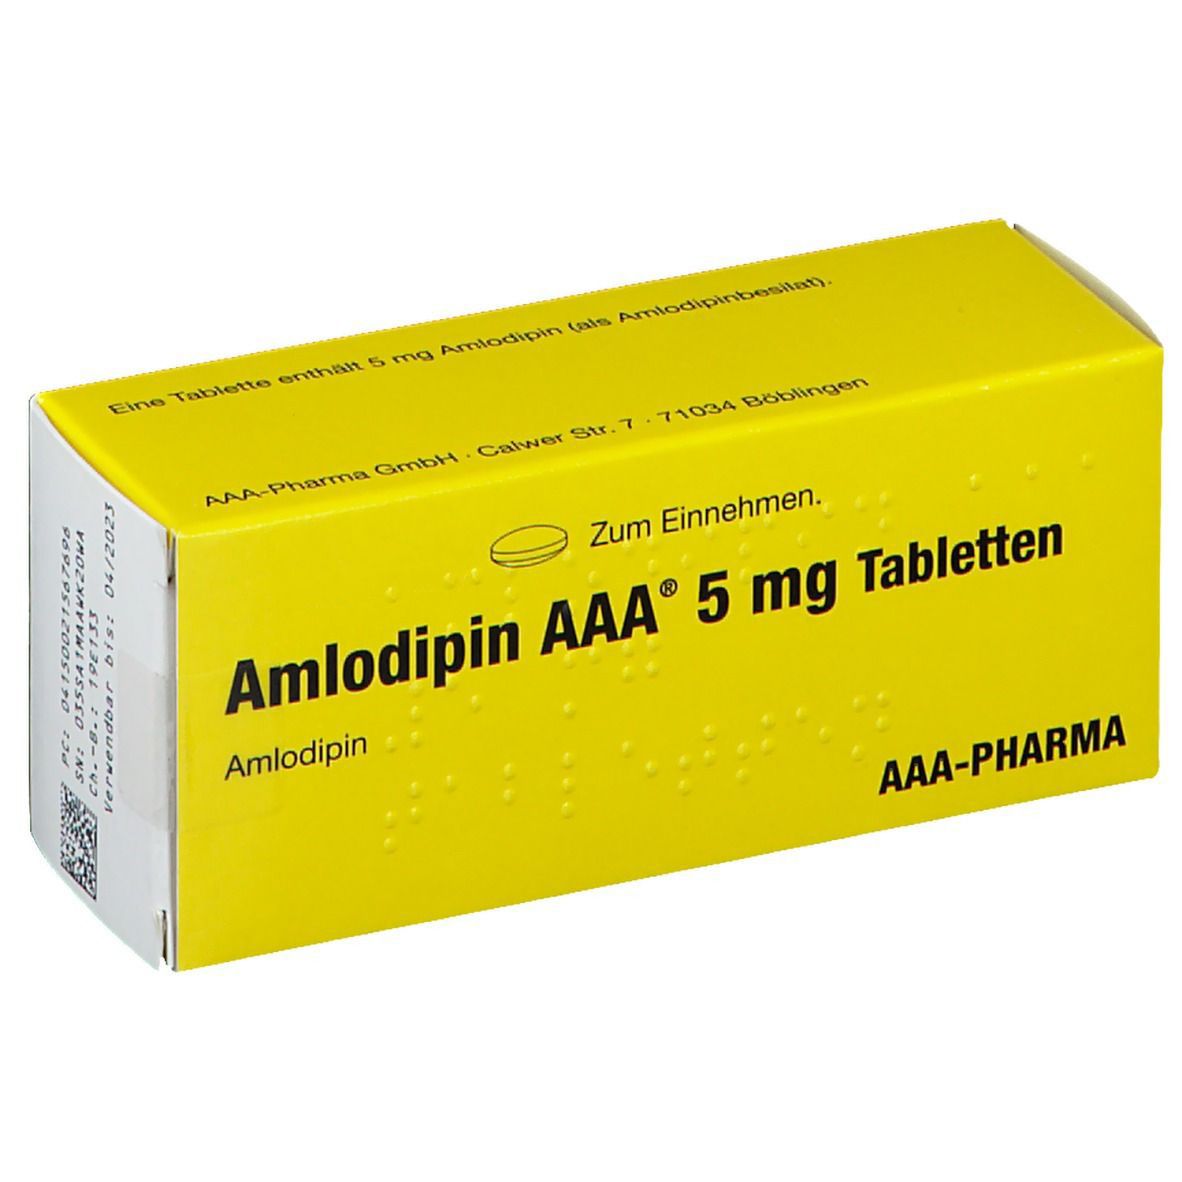 Amlodipin AAA® 5 mg